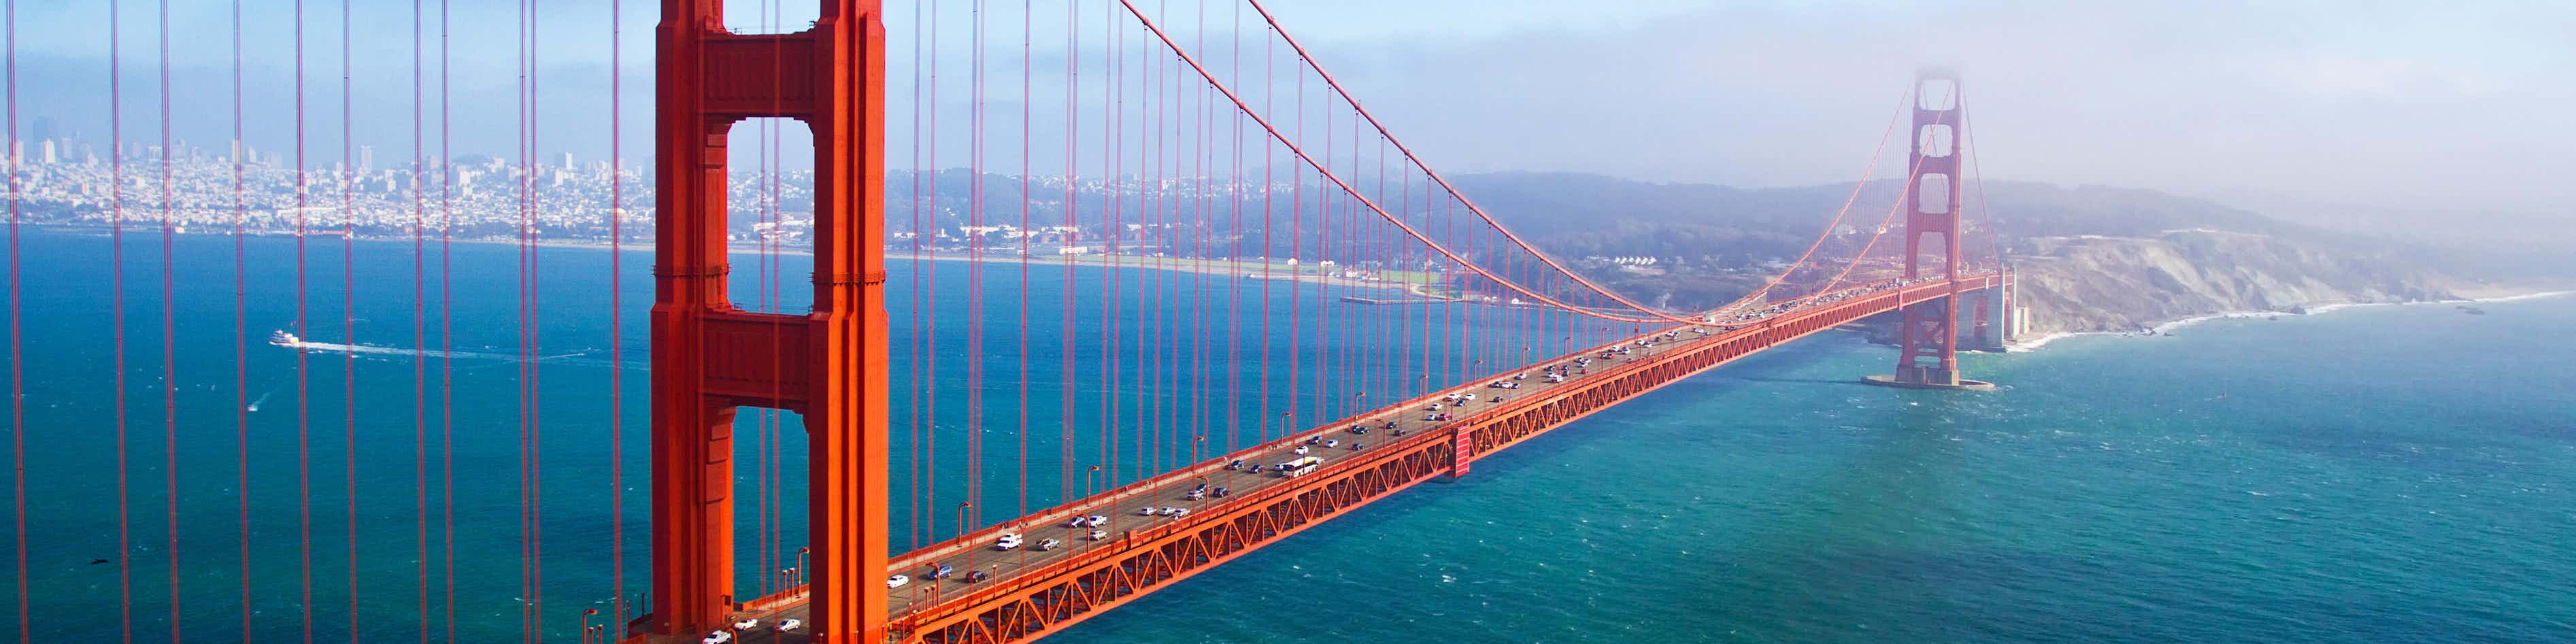 Tickets & Tours - Golden Gate Bridge, San Francisco - Viator